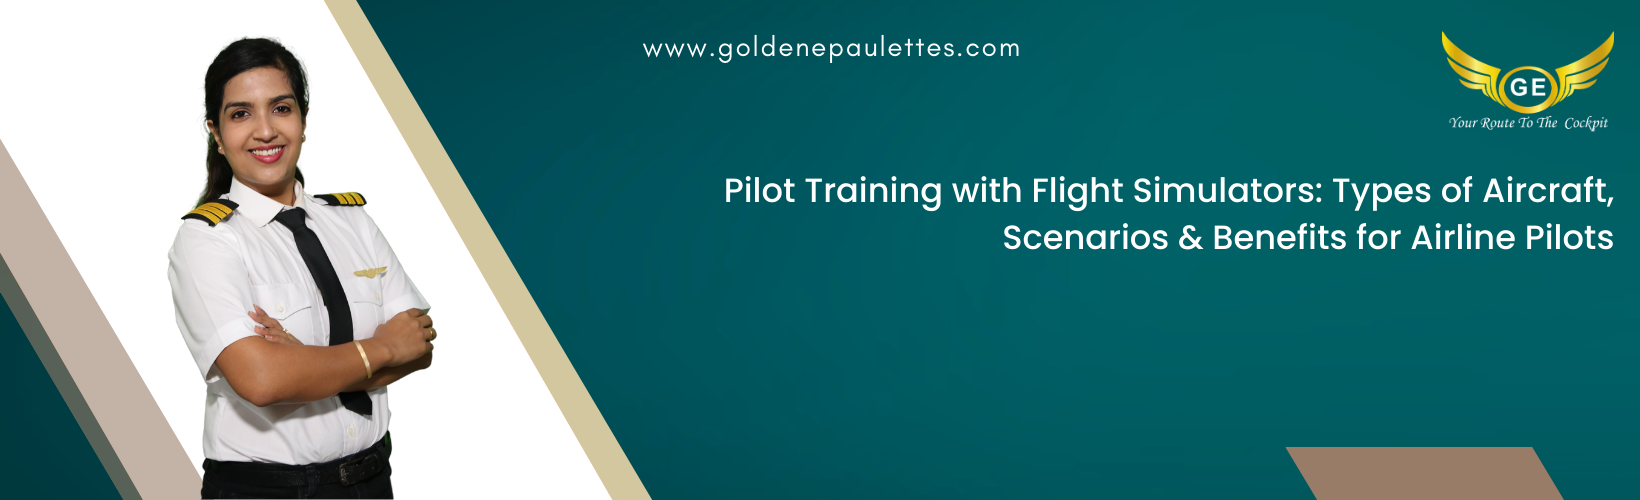 Aircraft Pilot Training with Flight Simulators